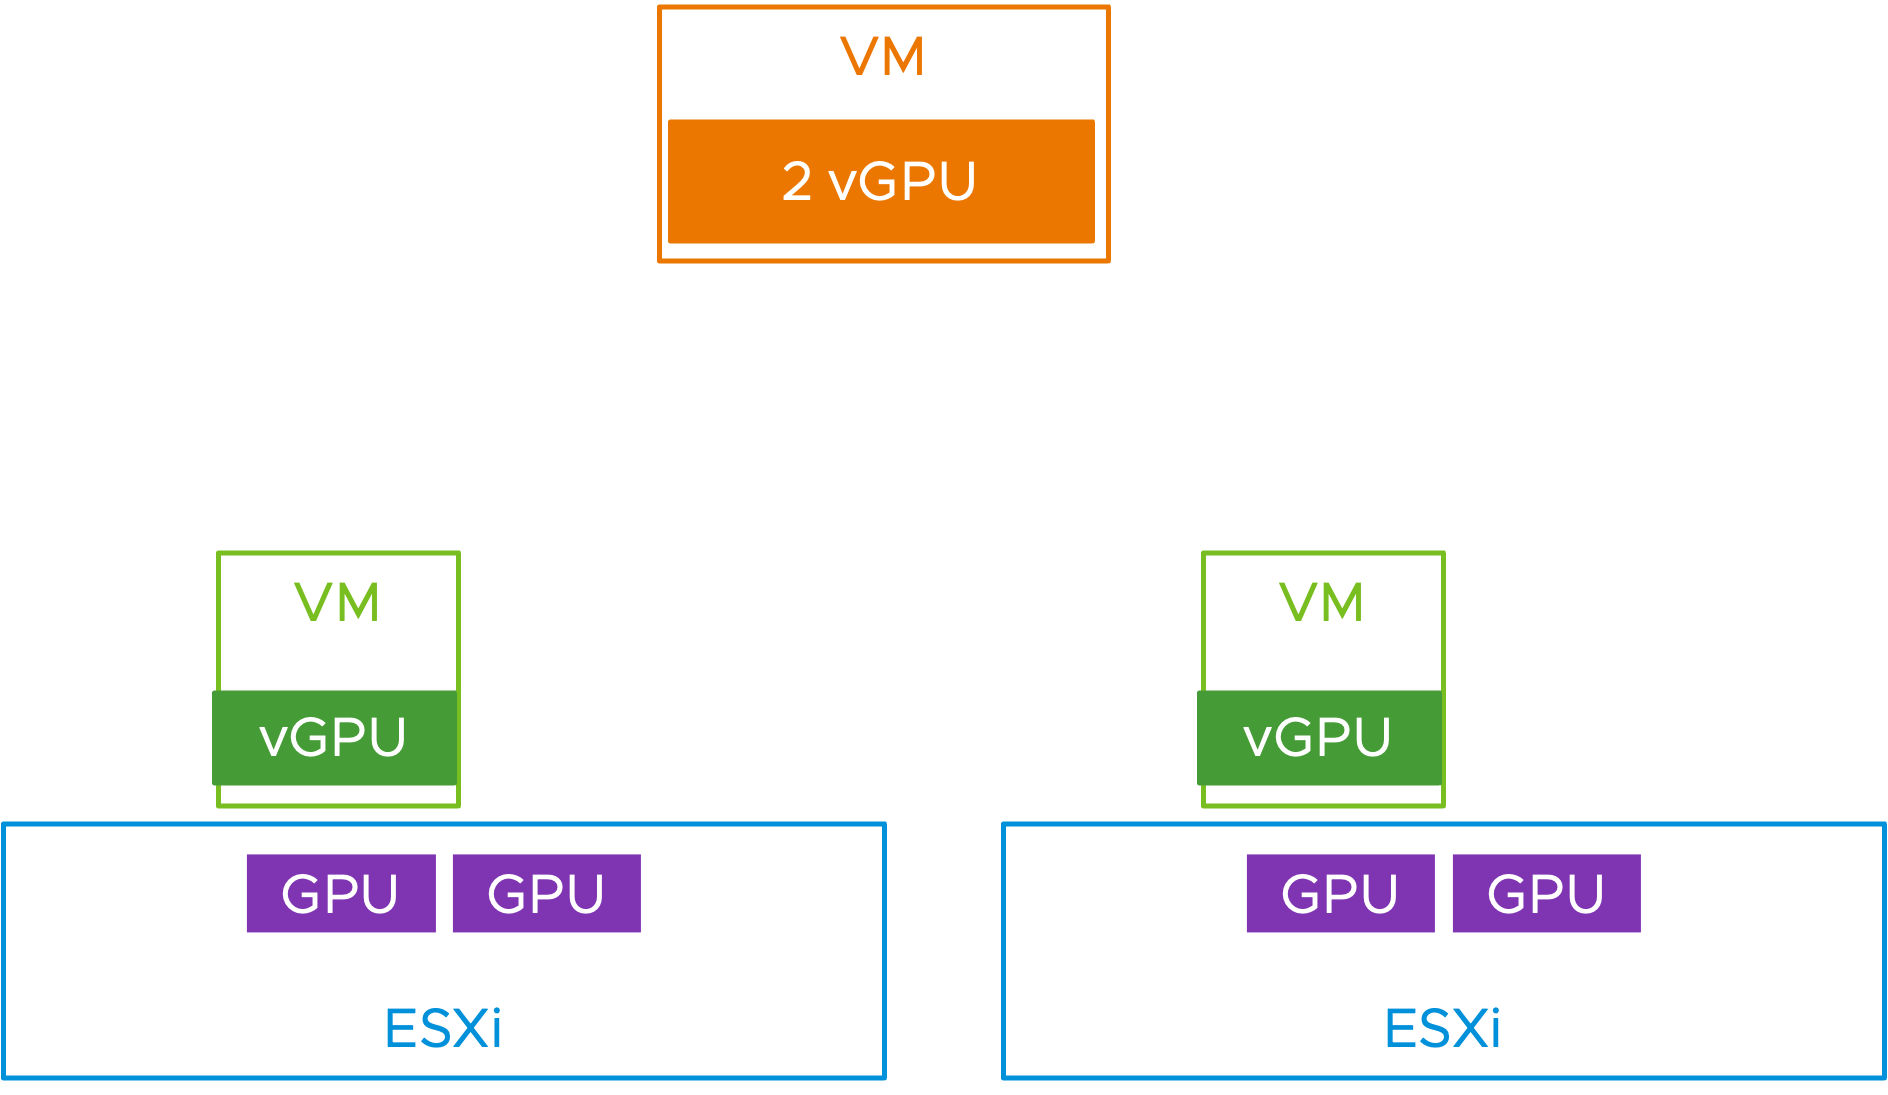 Two single vGPU VMs obstruct placement of a larger vGPU VM